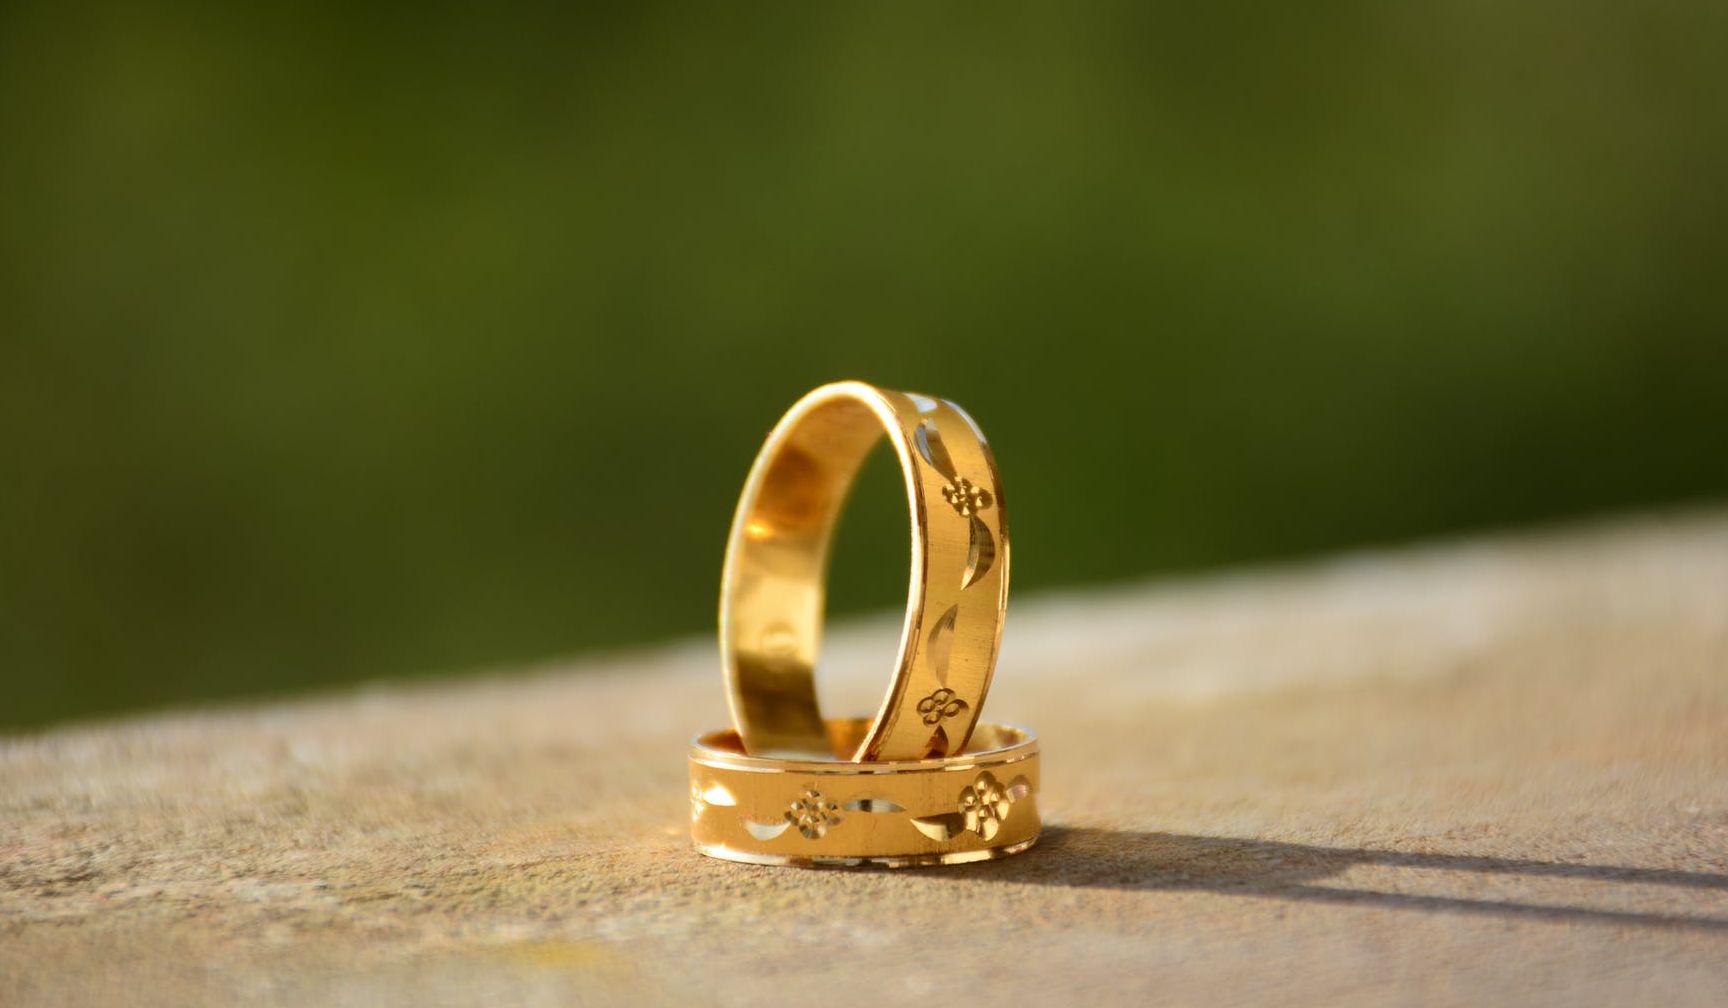 ILUSTRASI - Cara mudah untuk membersihkan emas yang mulai menghitam, untuk menjaga perhiasan semakin terlihat kinclong.